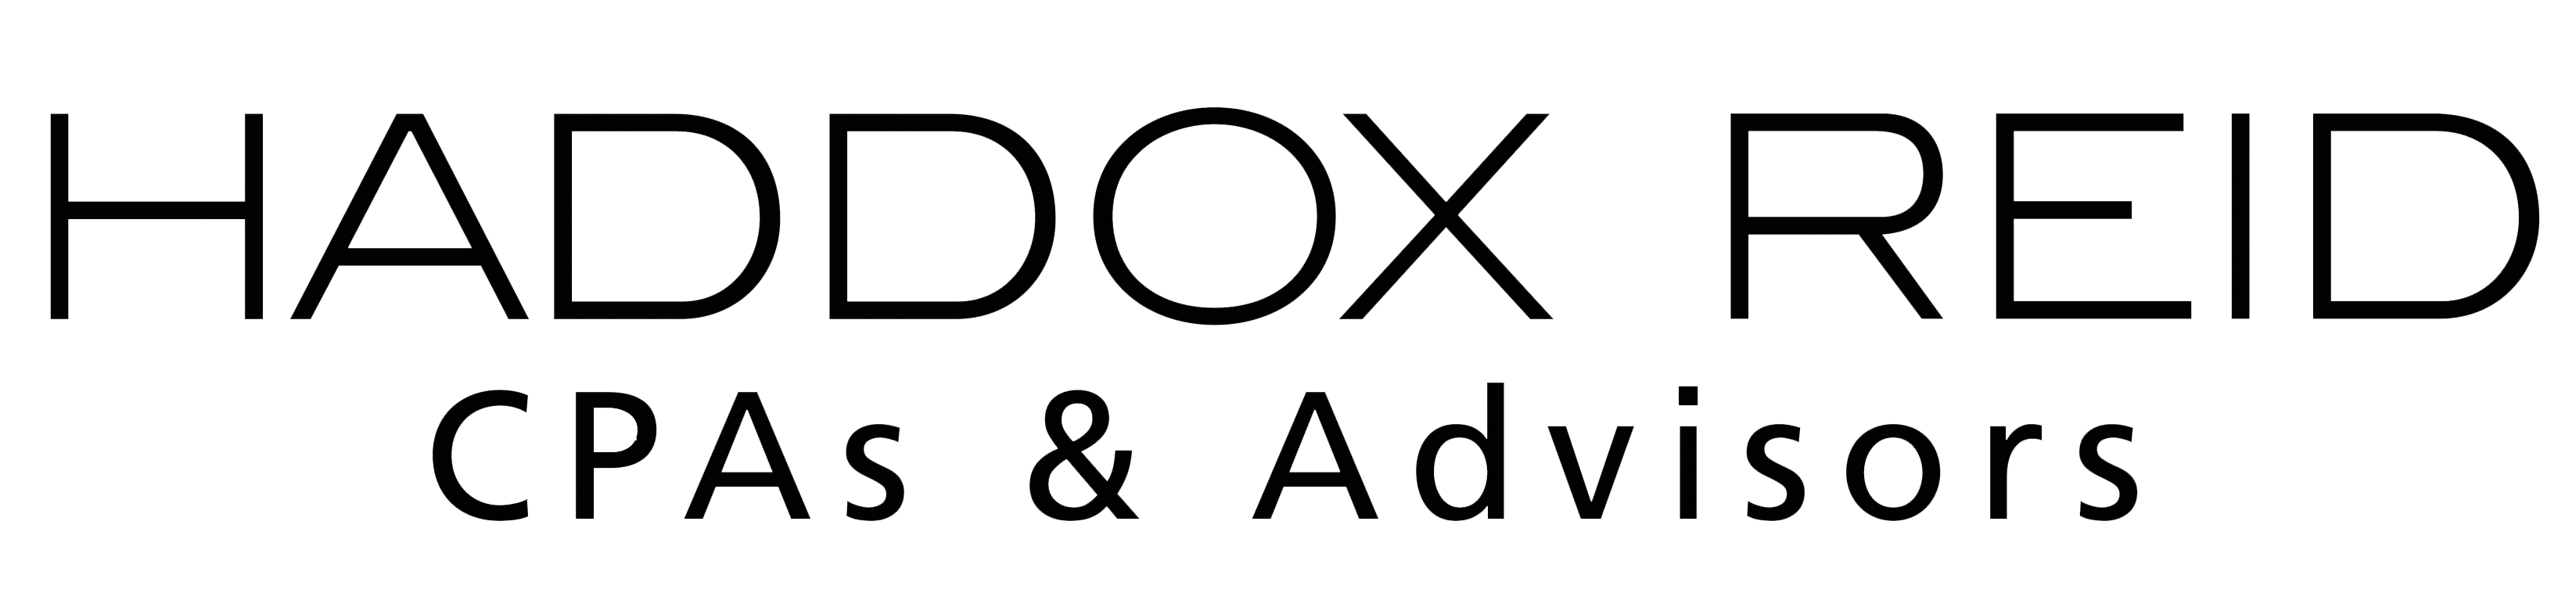 Haddox-Reid-logo-for-COPAS-Spring-2019-meeting